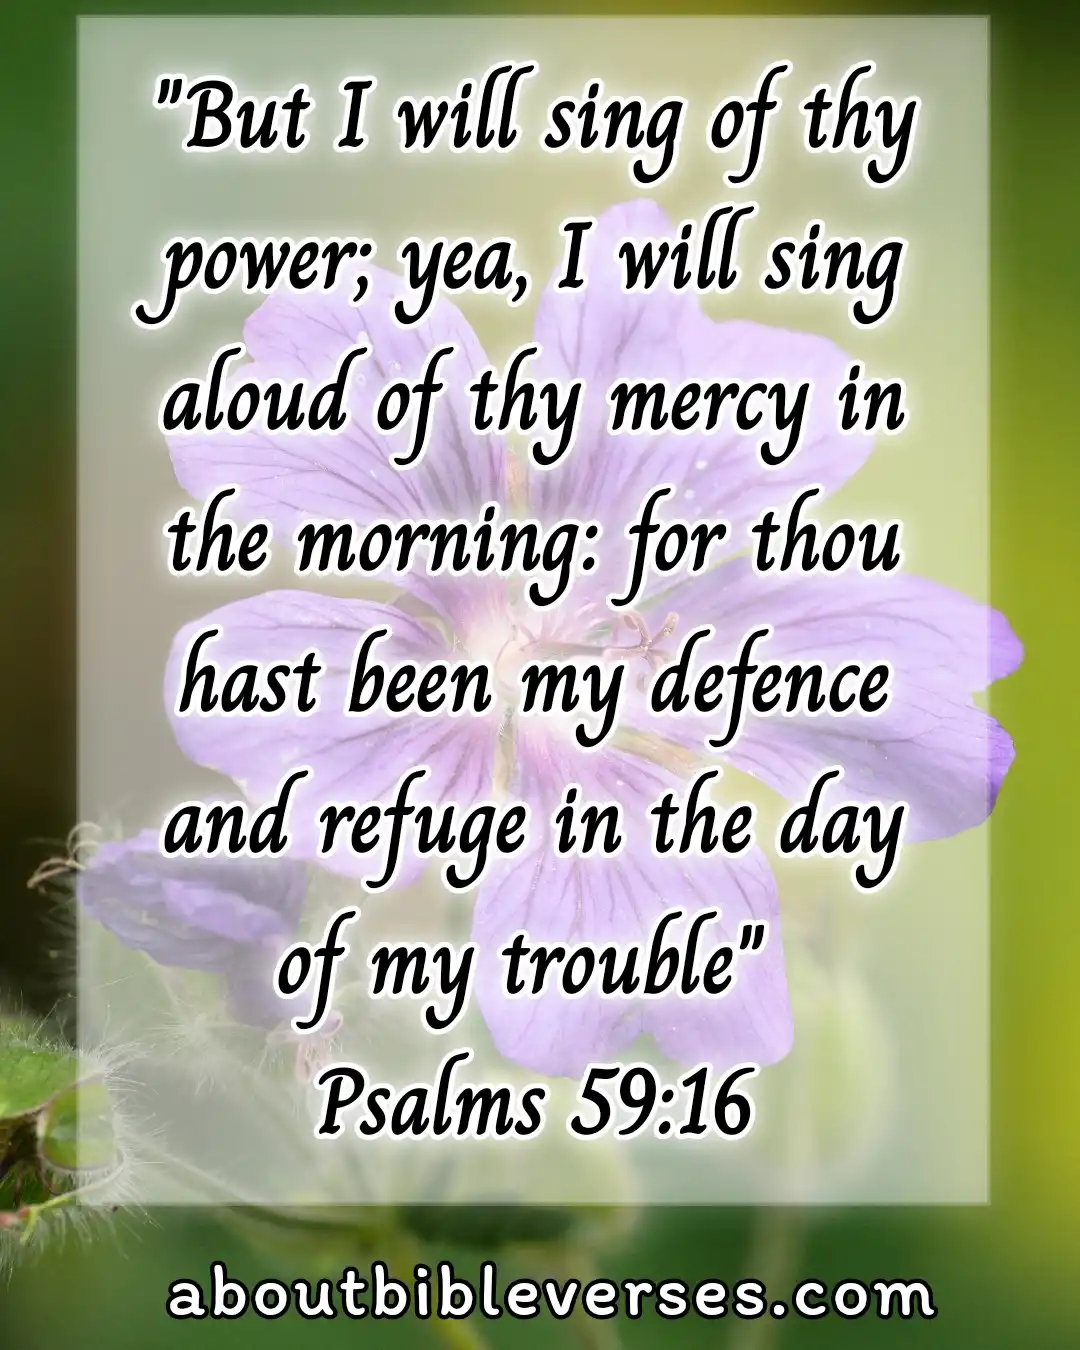 Good morning bible verses (Psalm 59:16)